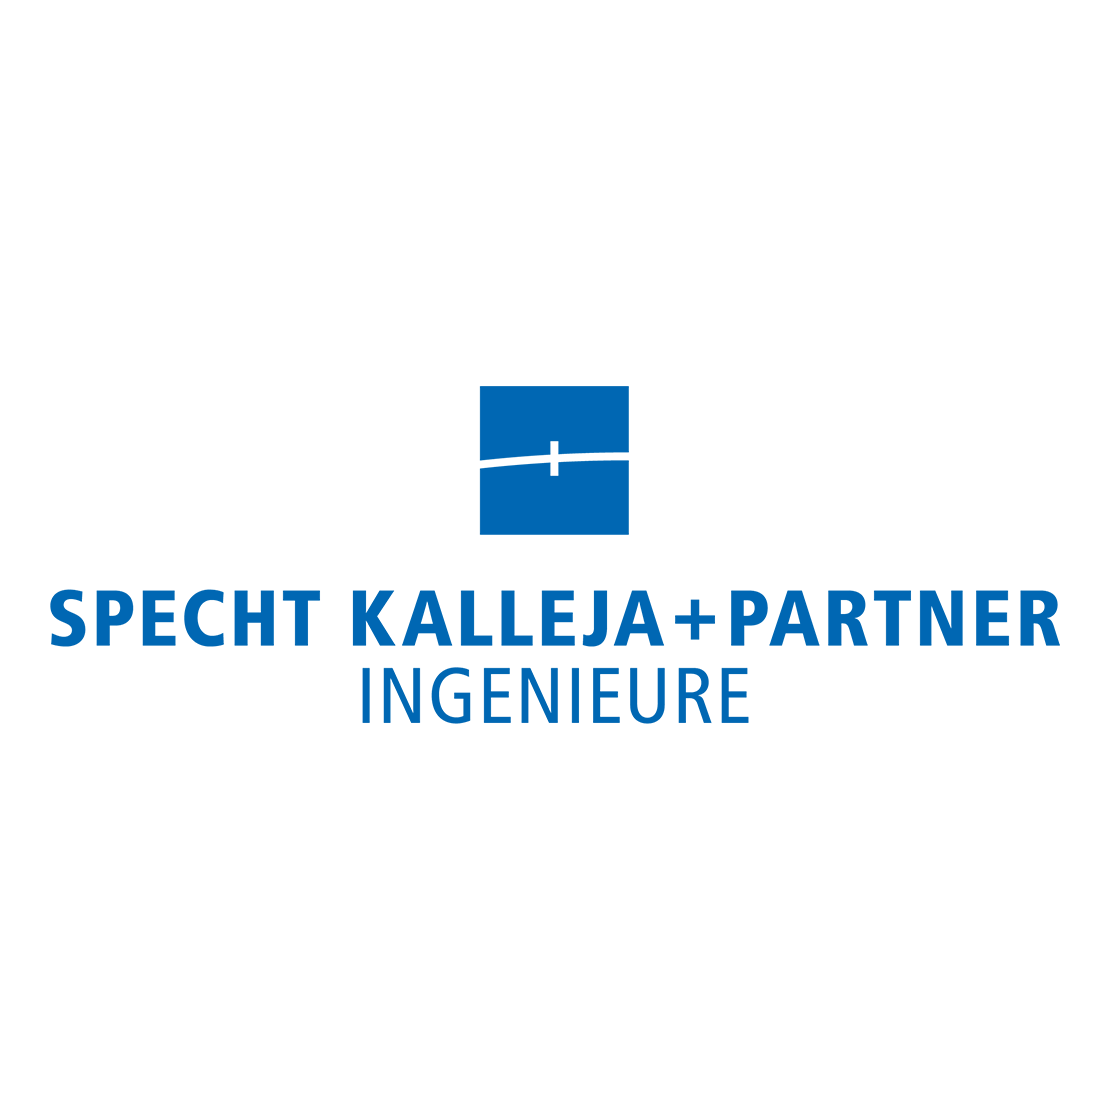 Logo SPECHT KALLEJA + PARTNER BERATENDE INGENIEURE GmbH